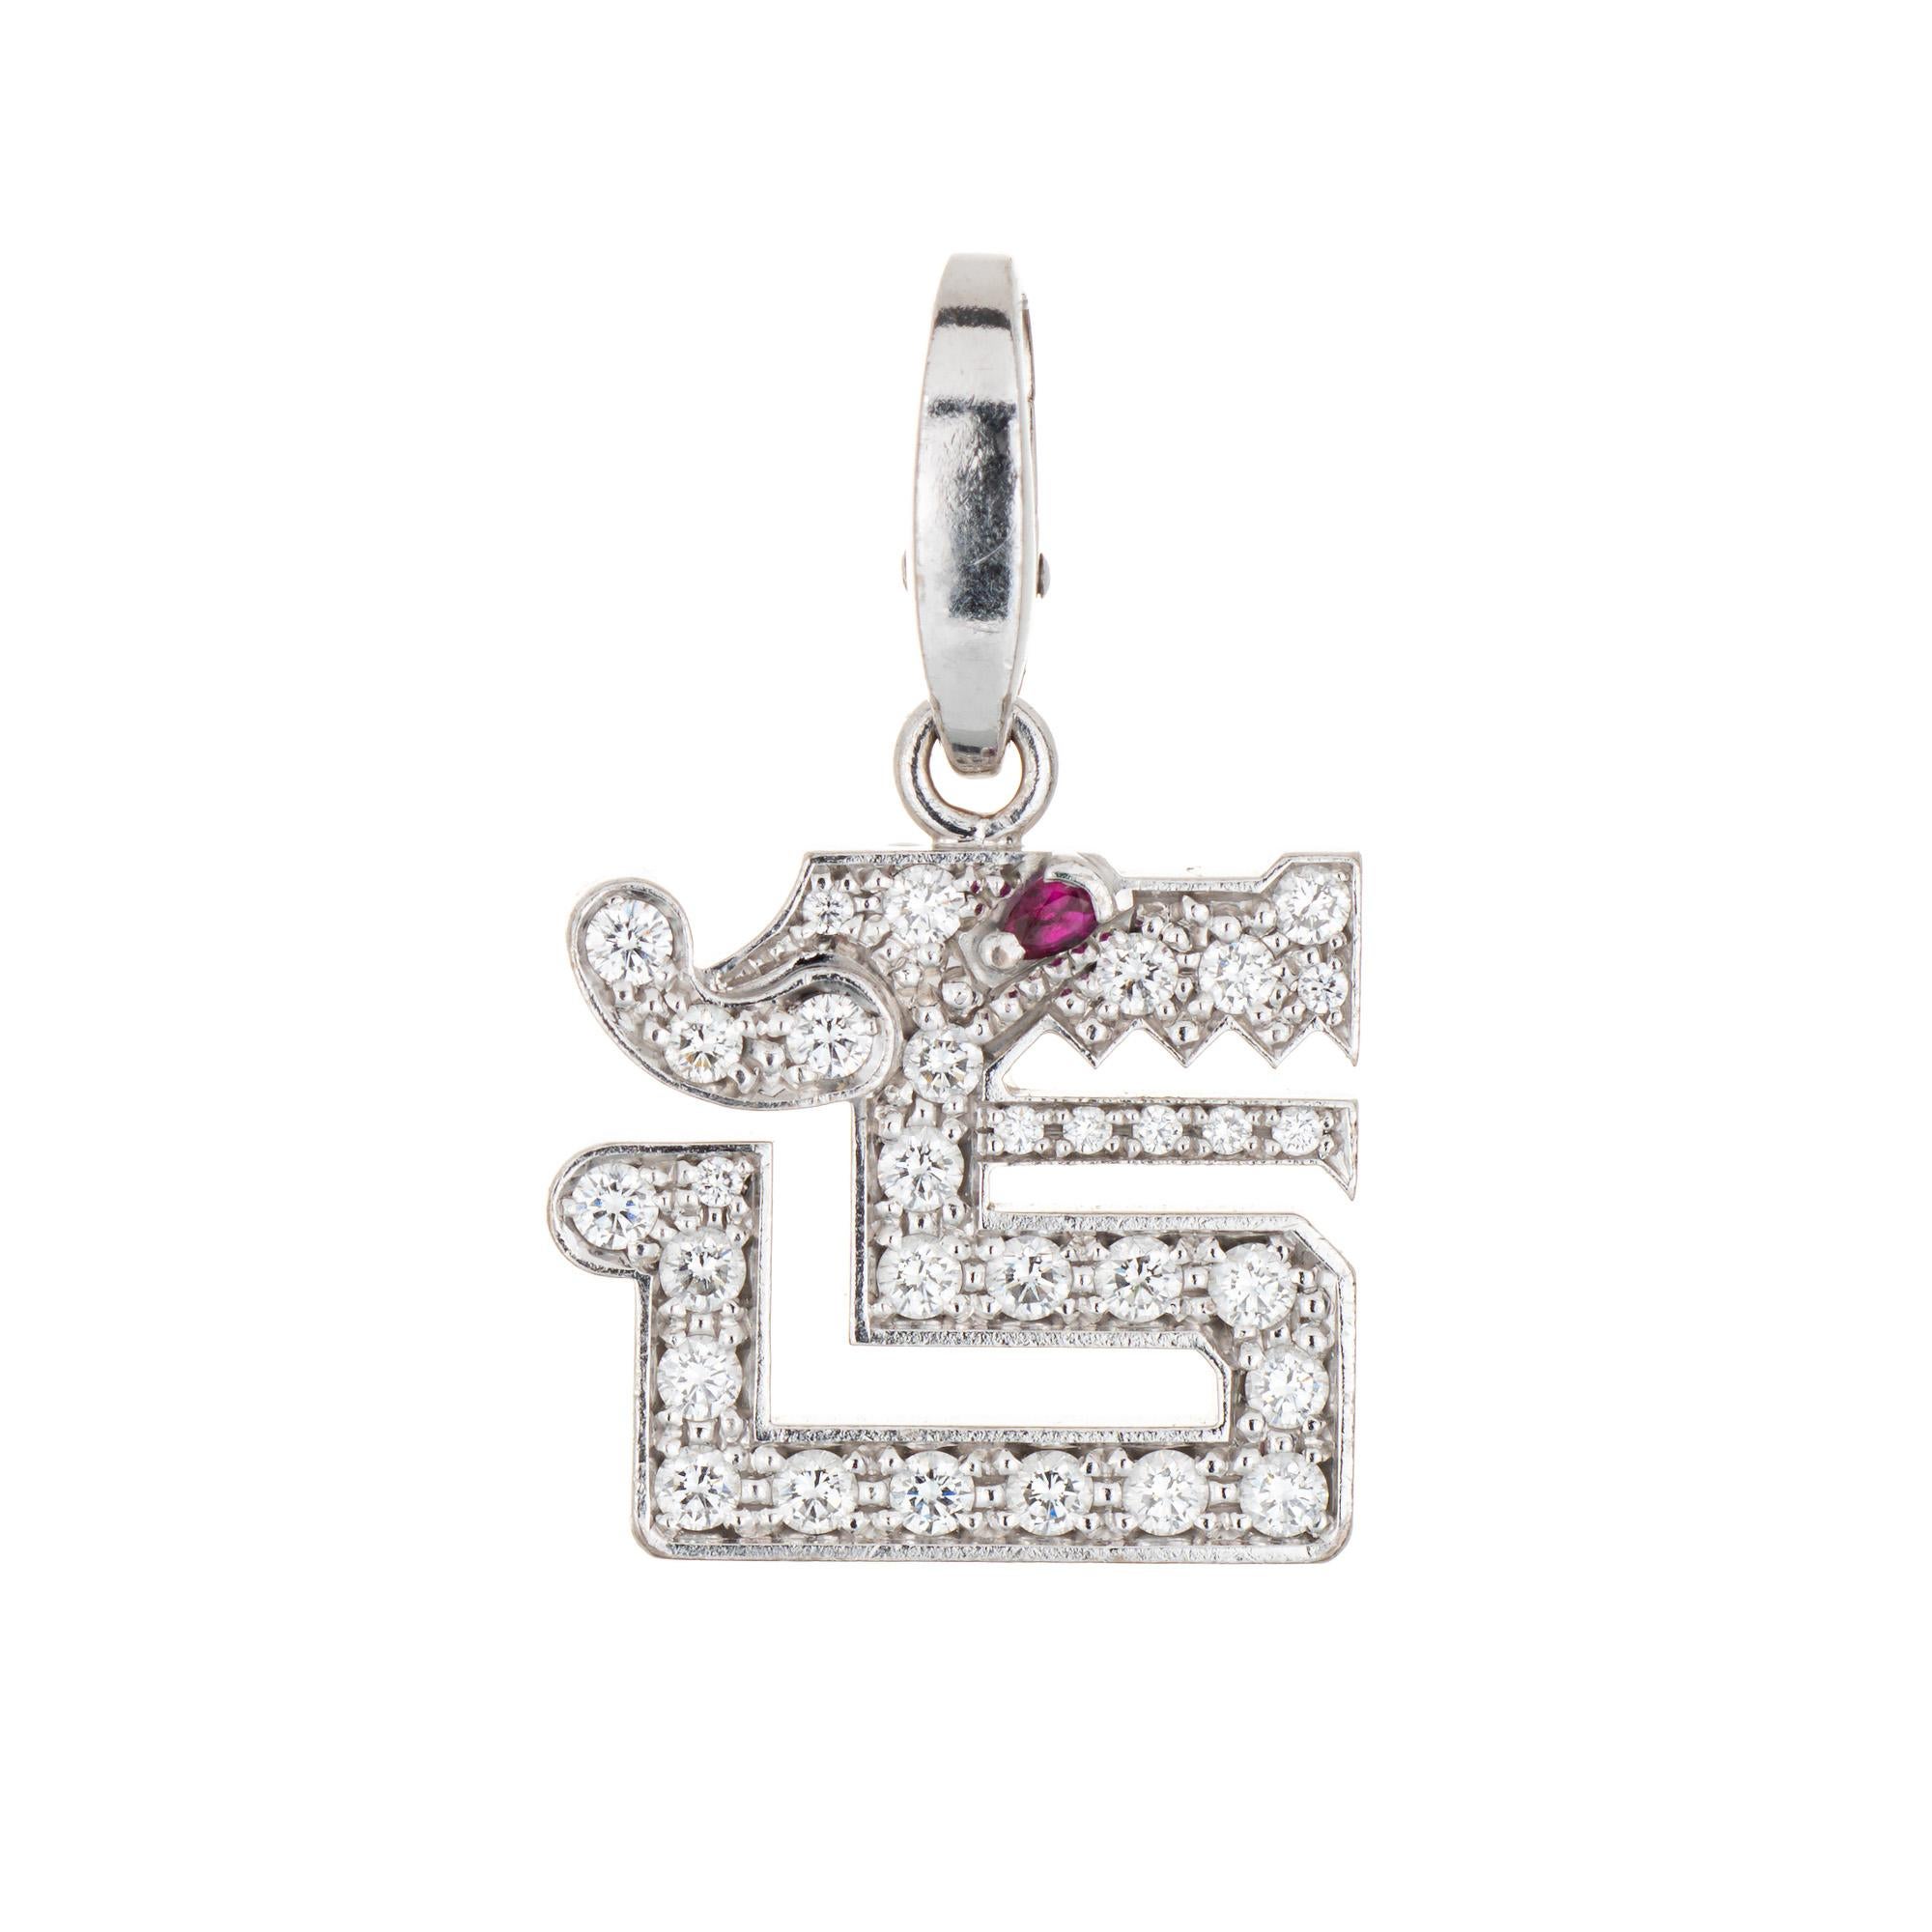 Contemporary Cartier Le Baiser du Dragon Charm 18k White Gold Diamond Pendant Fine Jewelry